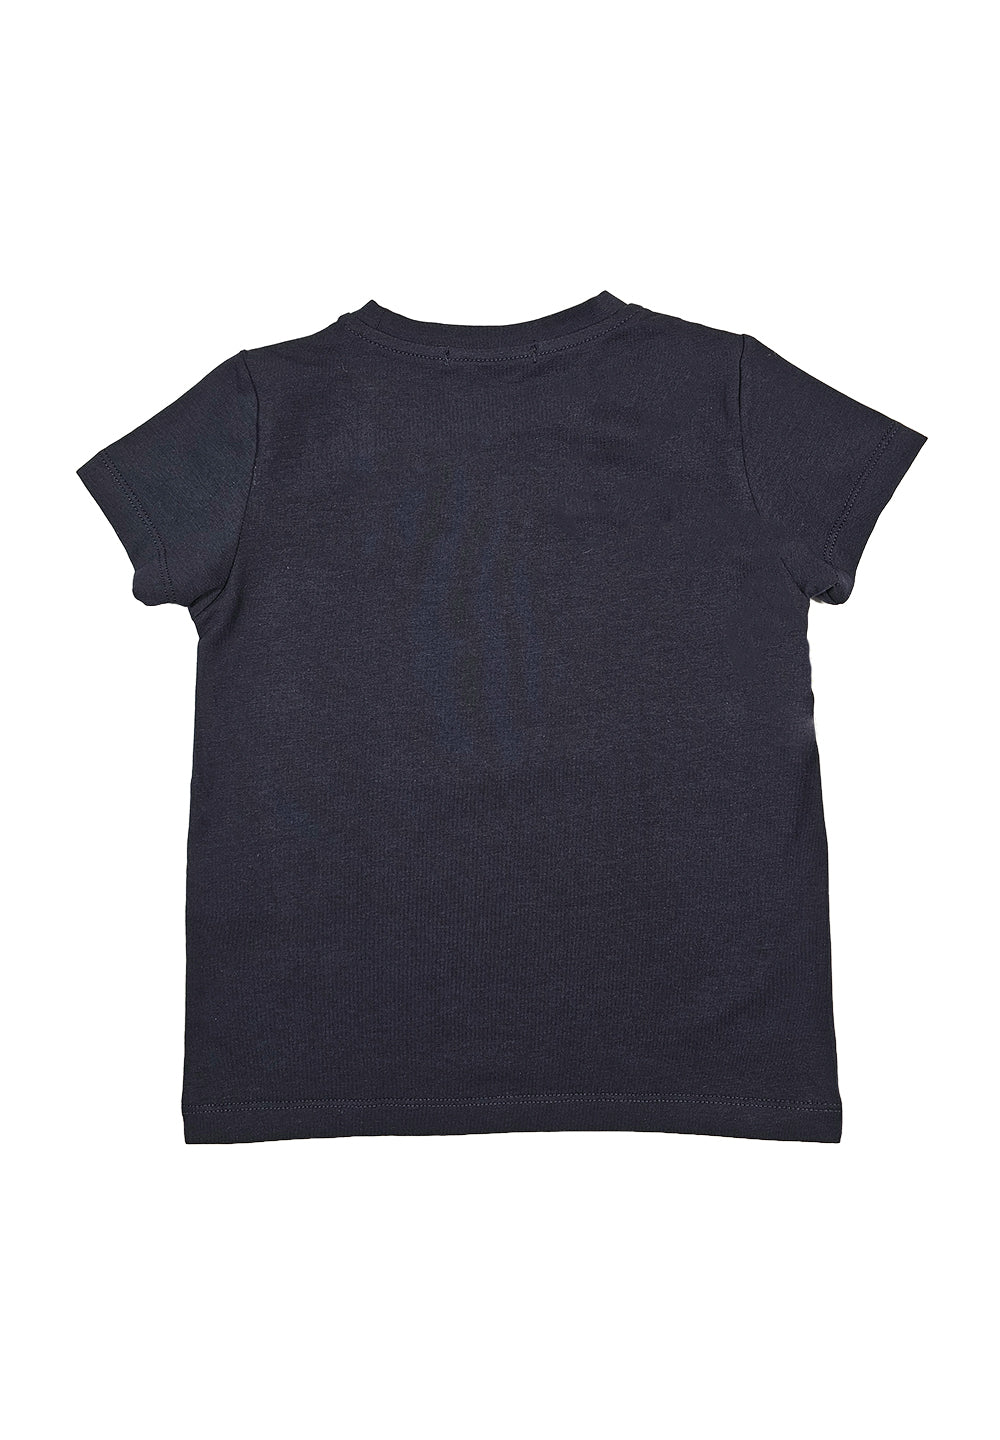 T-shirt blu per neoanto - Primamoda kids